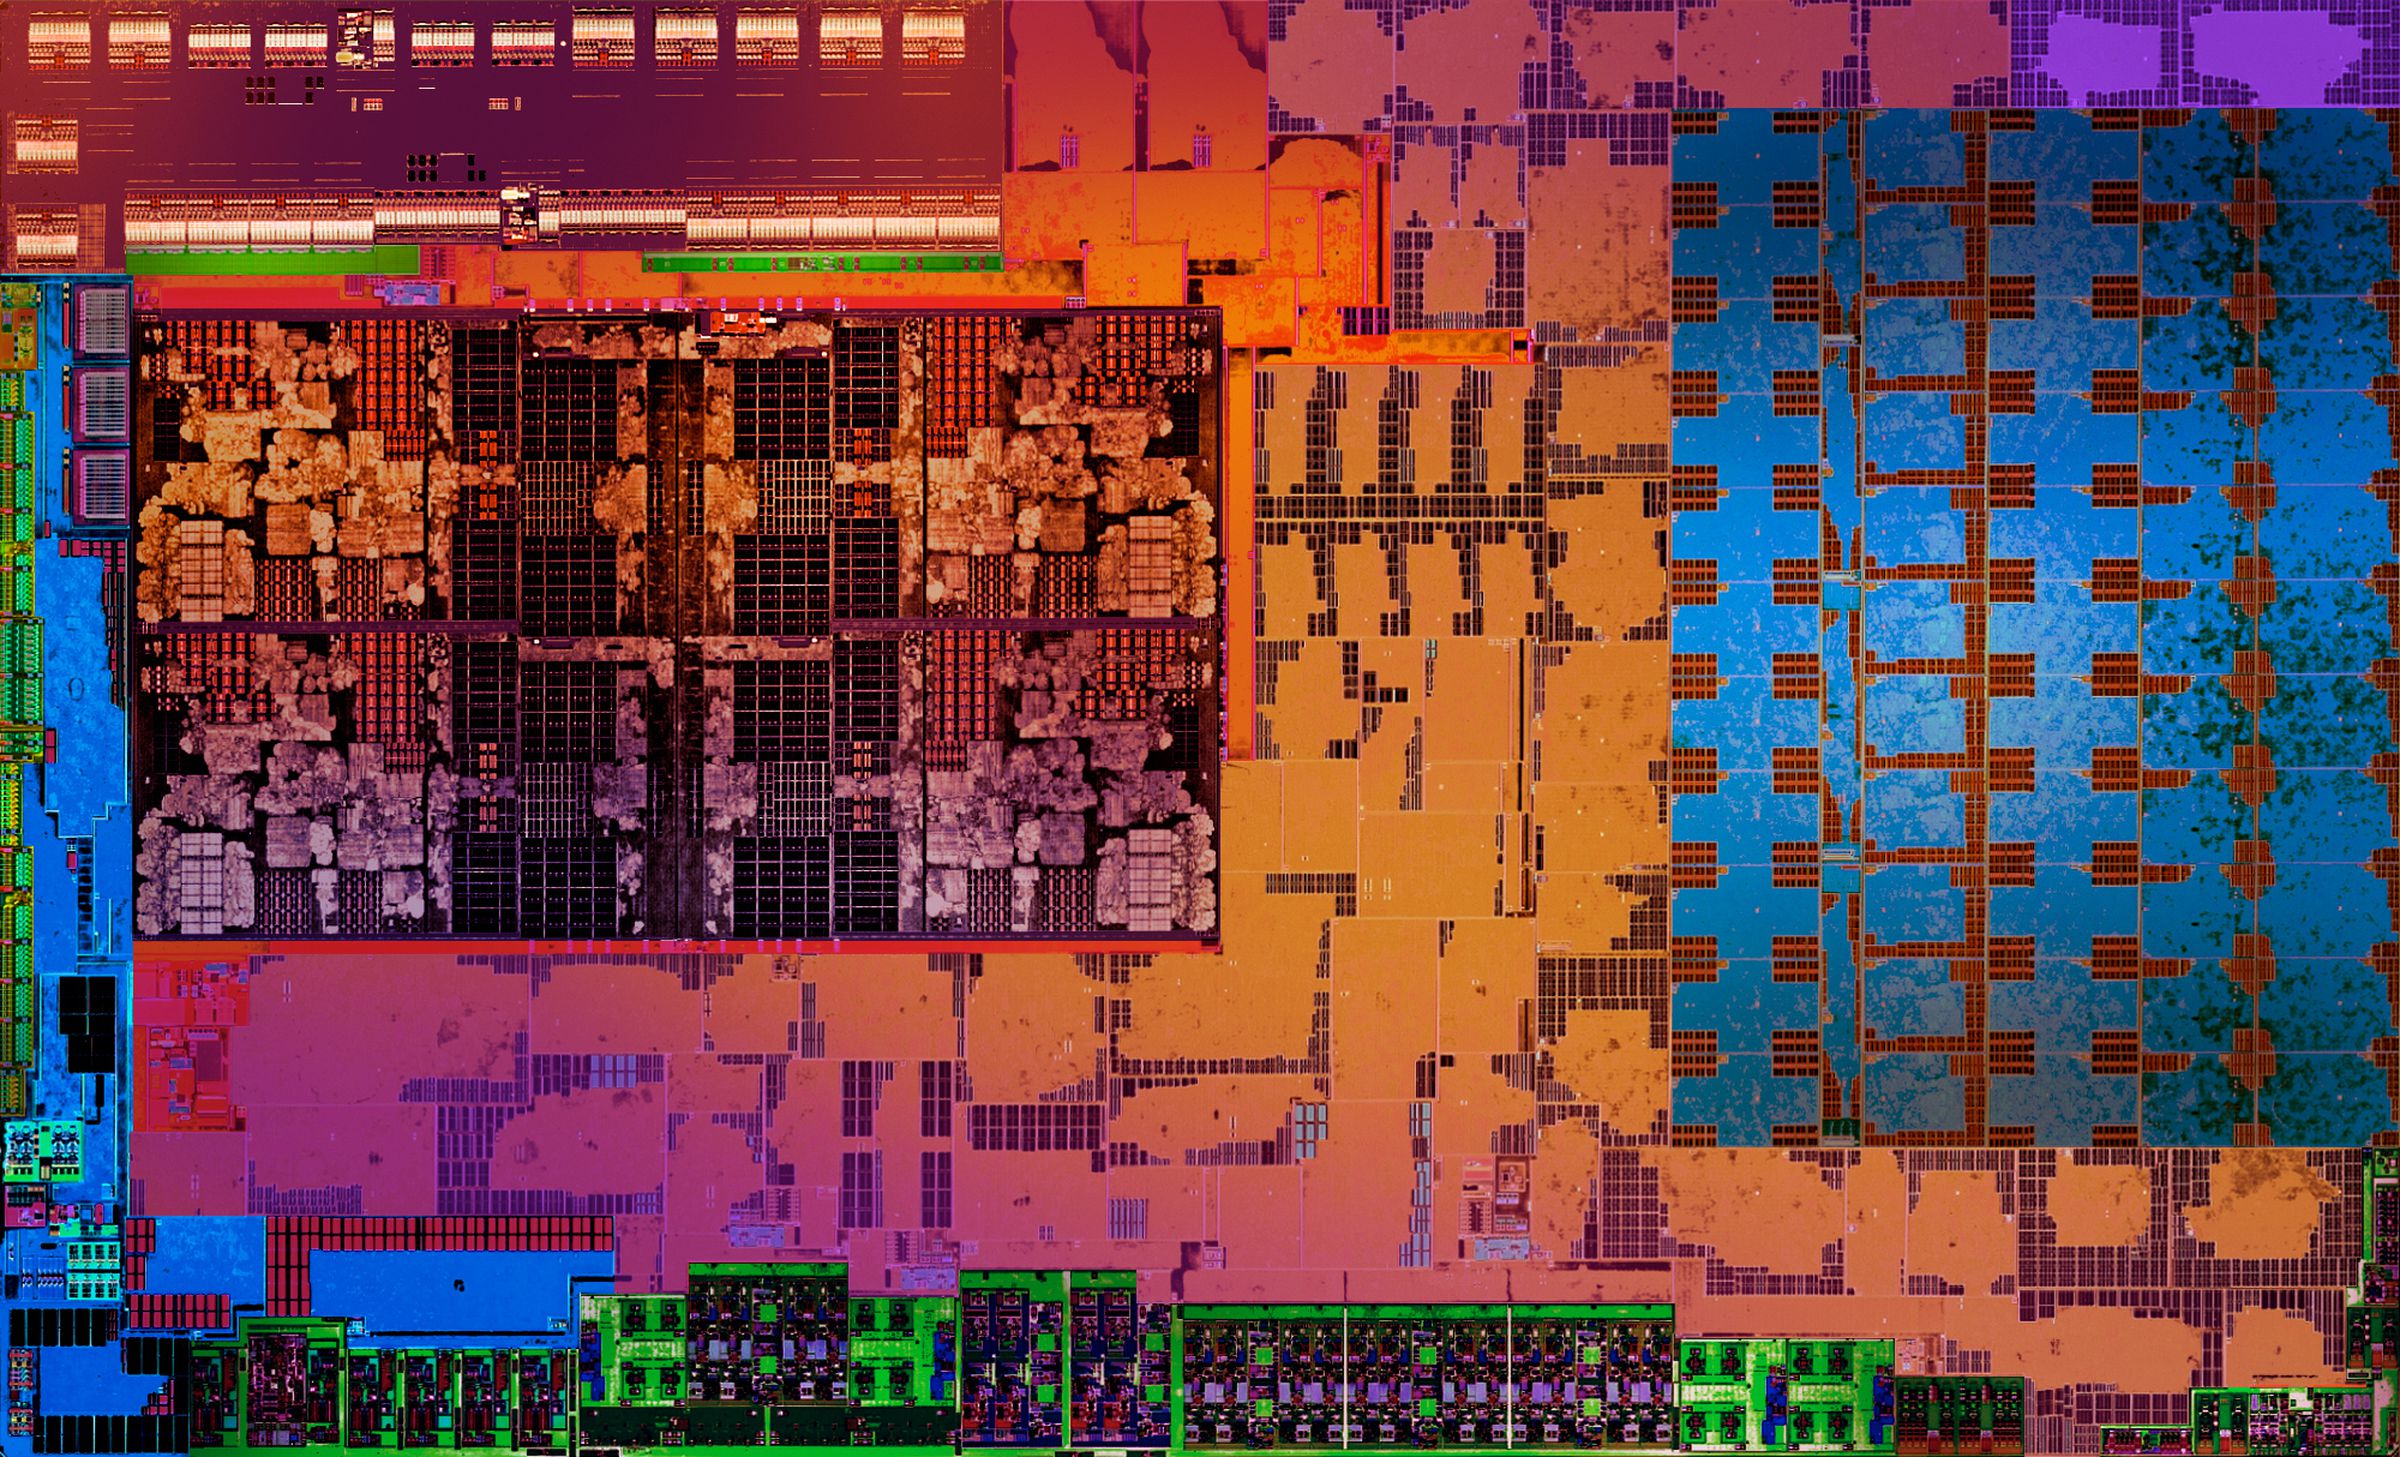 A die for AMD’s new Ryzen laptop processors